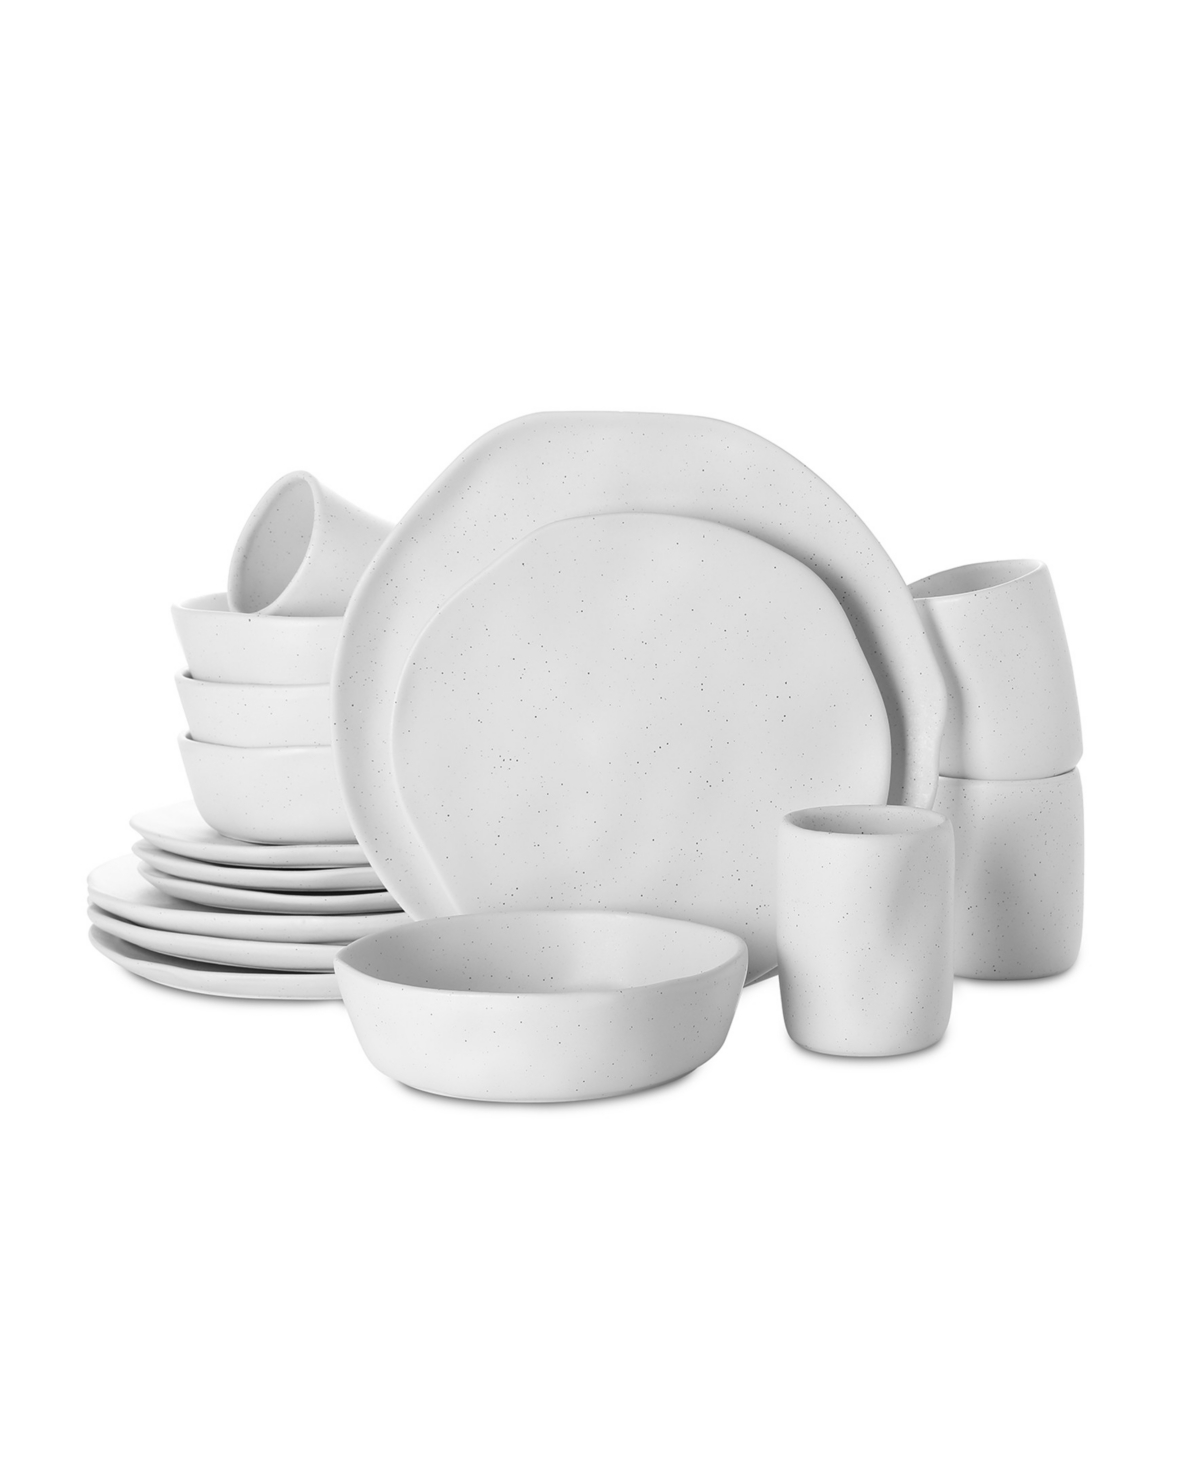 Hekonda Stoneware 16 Pieces Dinnerware Set, Service for 4 - White Speckled